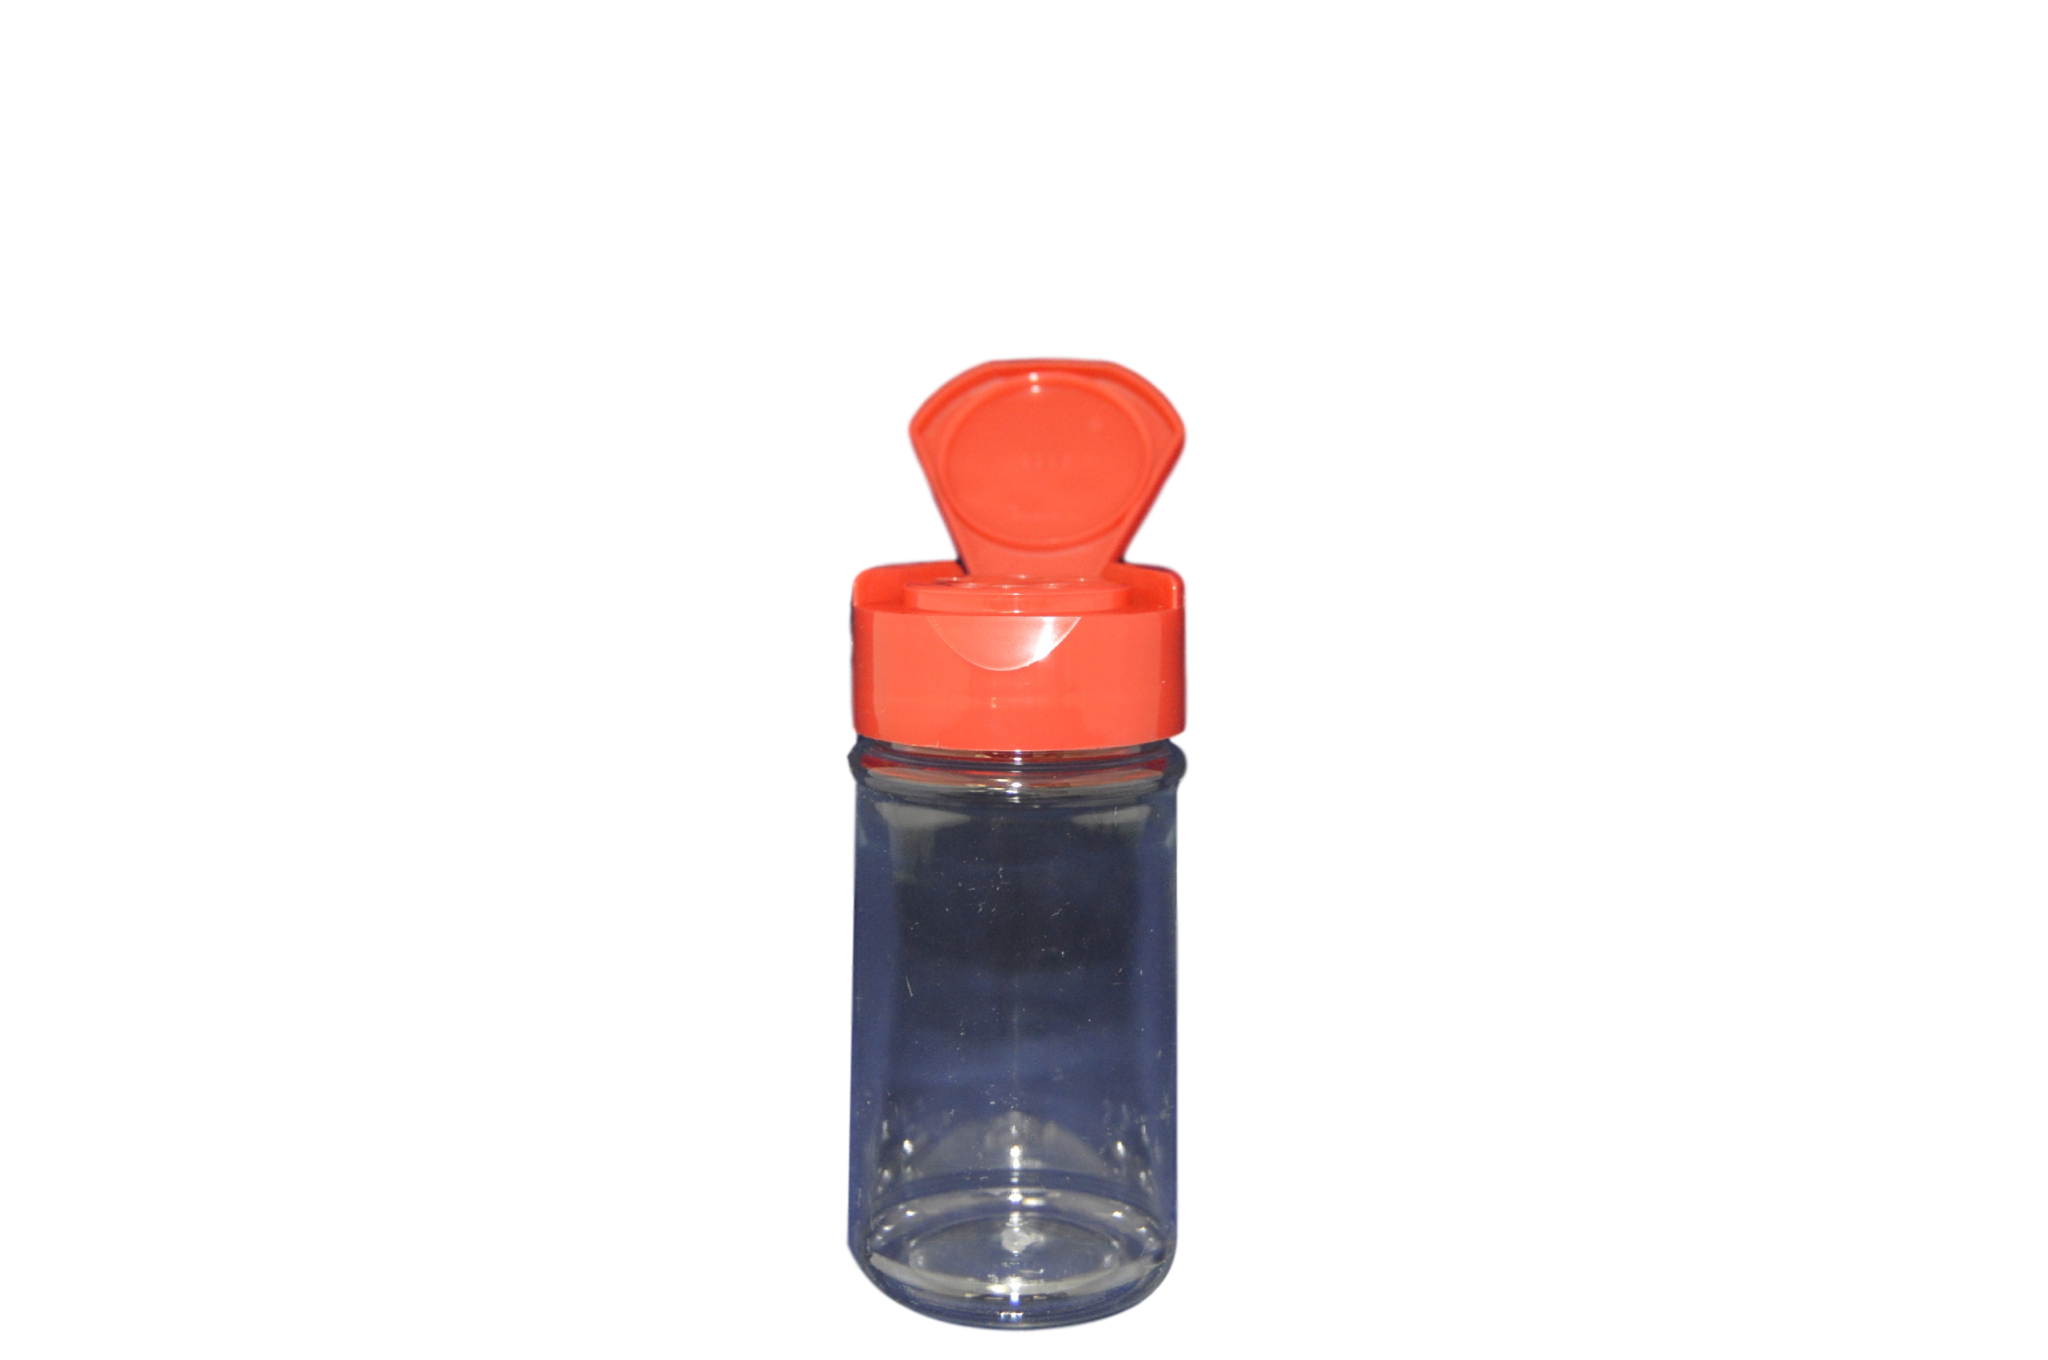 3oz Natural PP Plastic Spice Jars (White Cap) - Natural 43-485